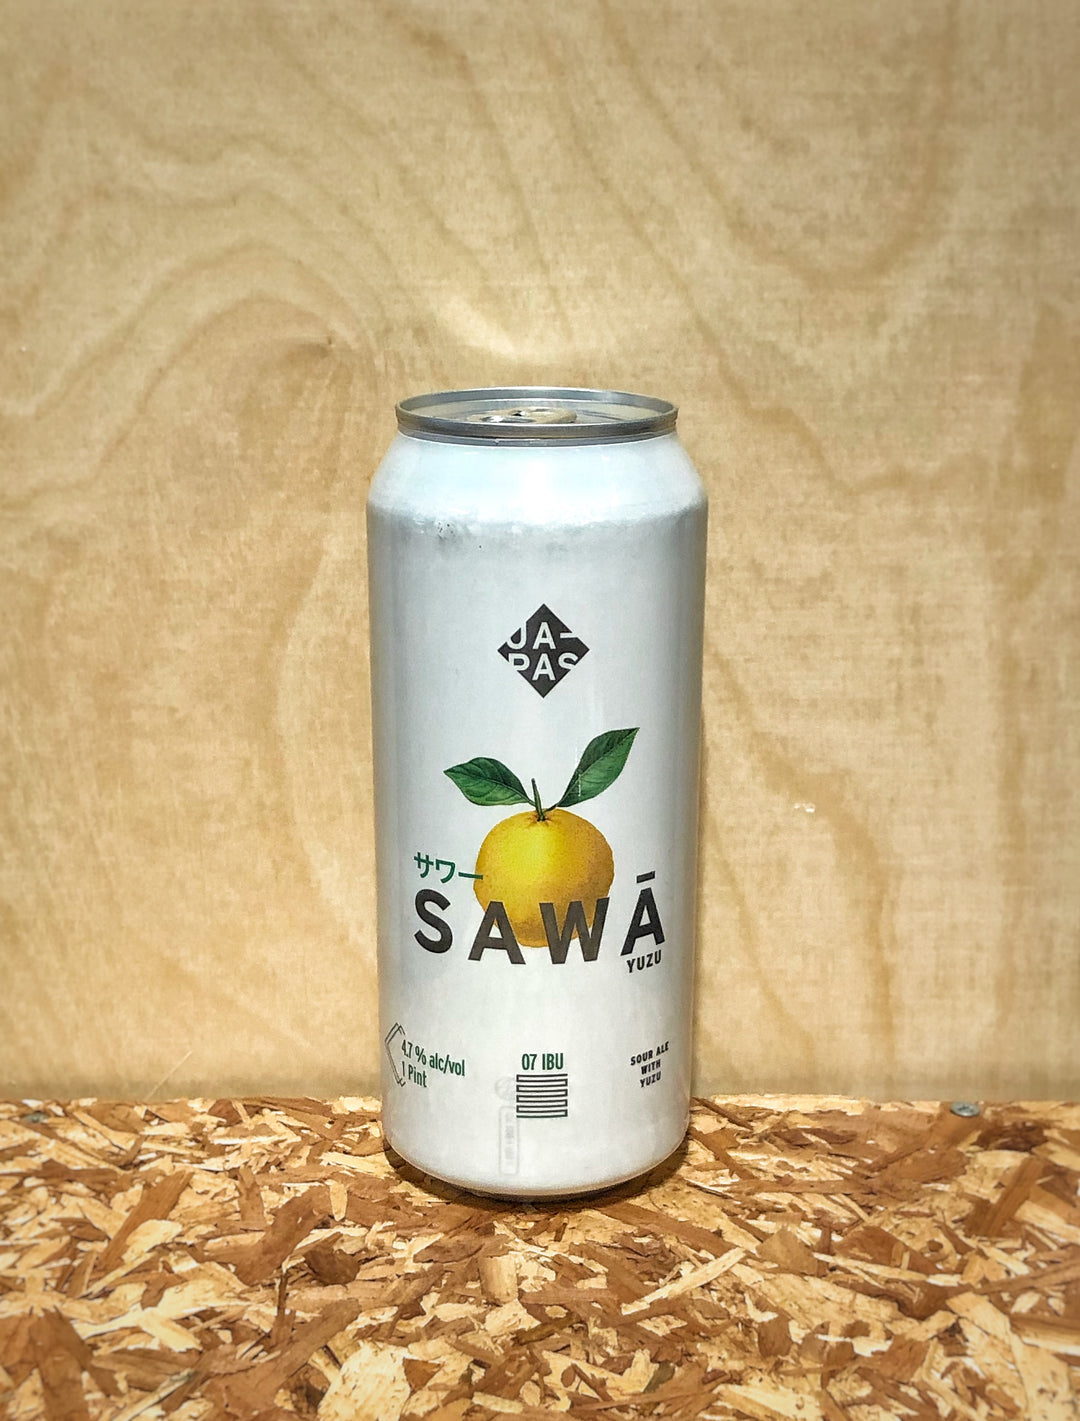 Japas Cervejaria 'Sawa' Yuzu Sour Ale (Brazil)